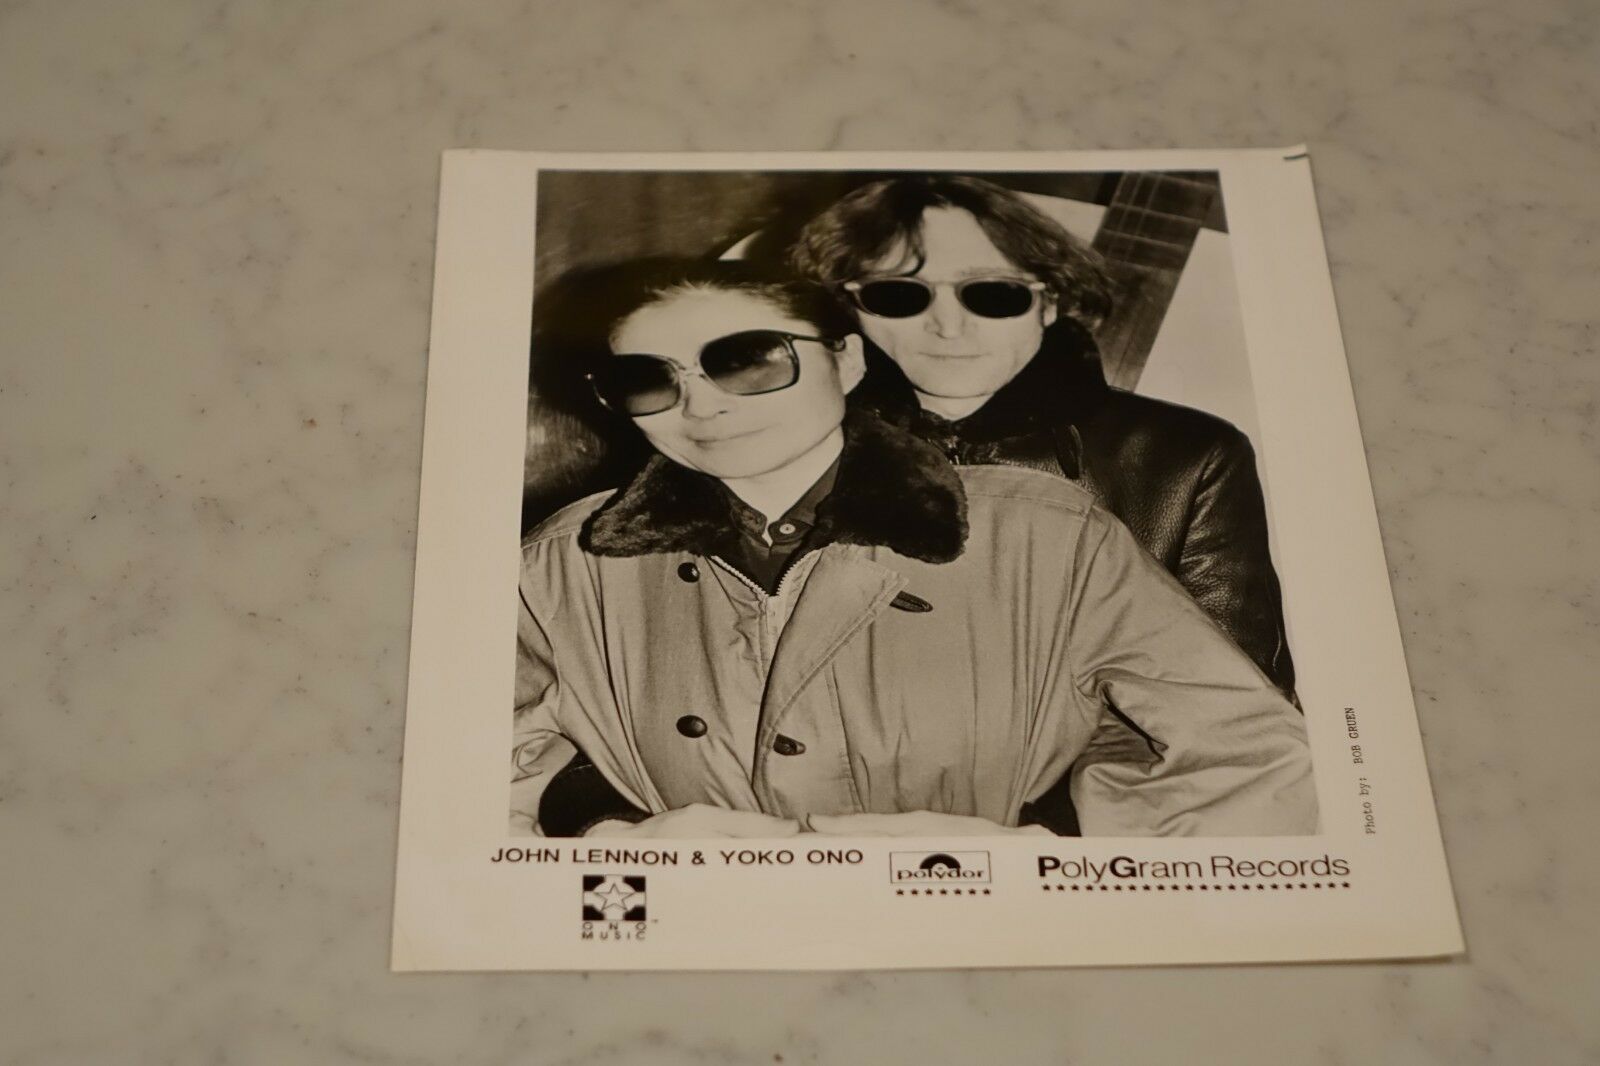 John Lennon & Yoko Ono. Polygram Records Promo Photo - Great Condition